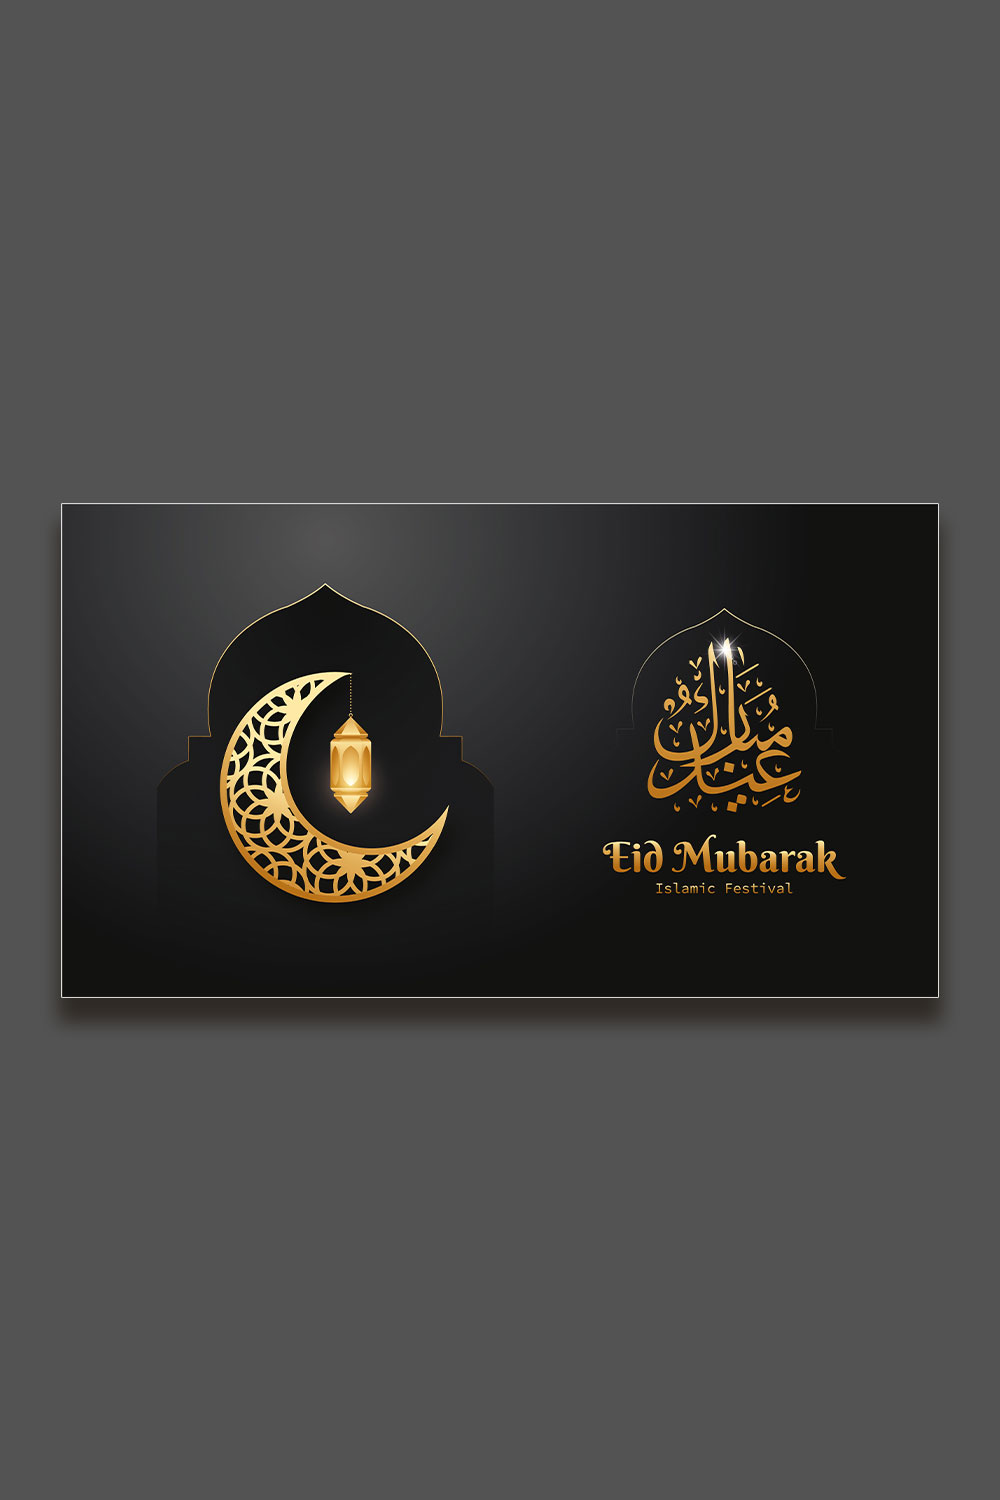 Eid Mubarak pinterest preview image.